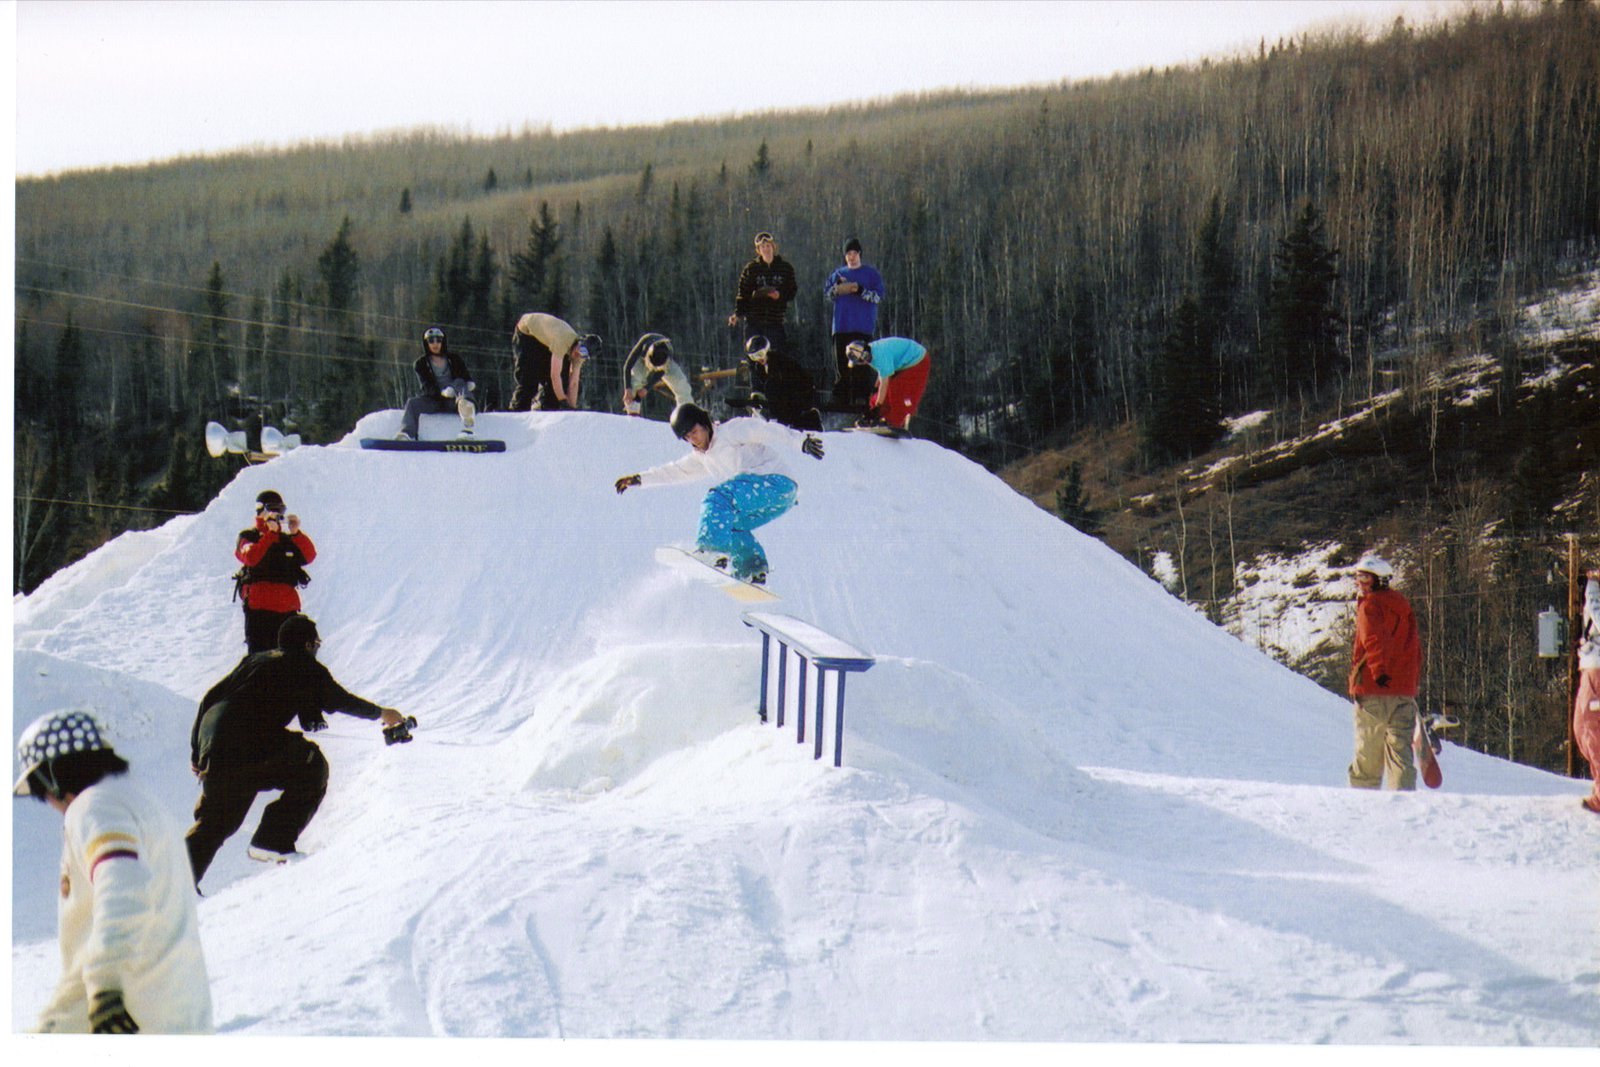 Snowboardering